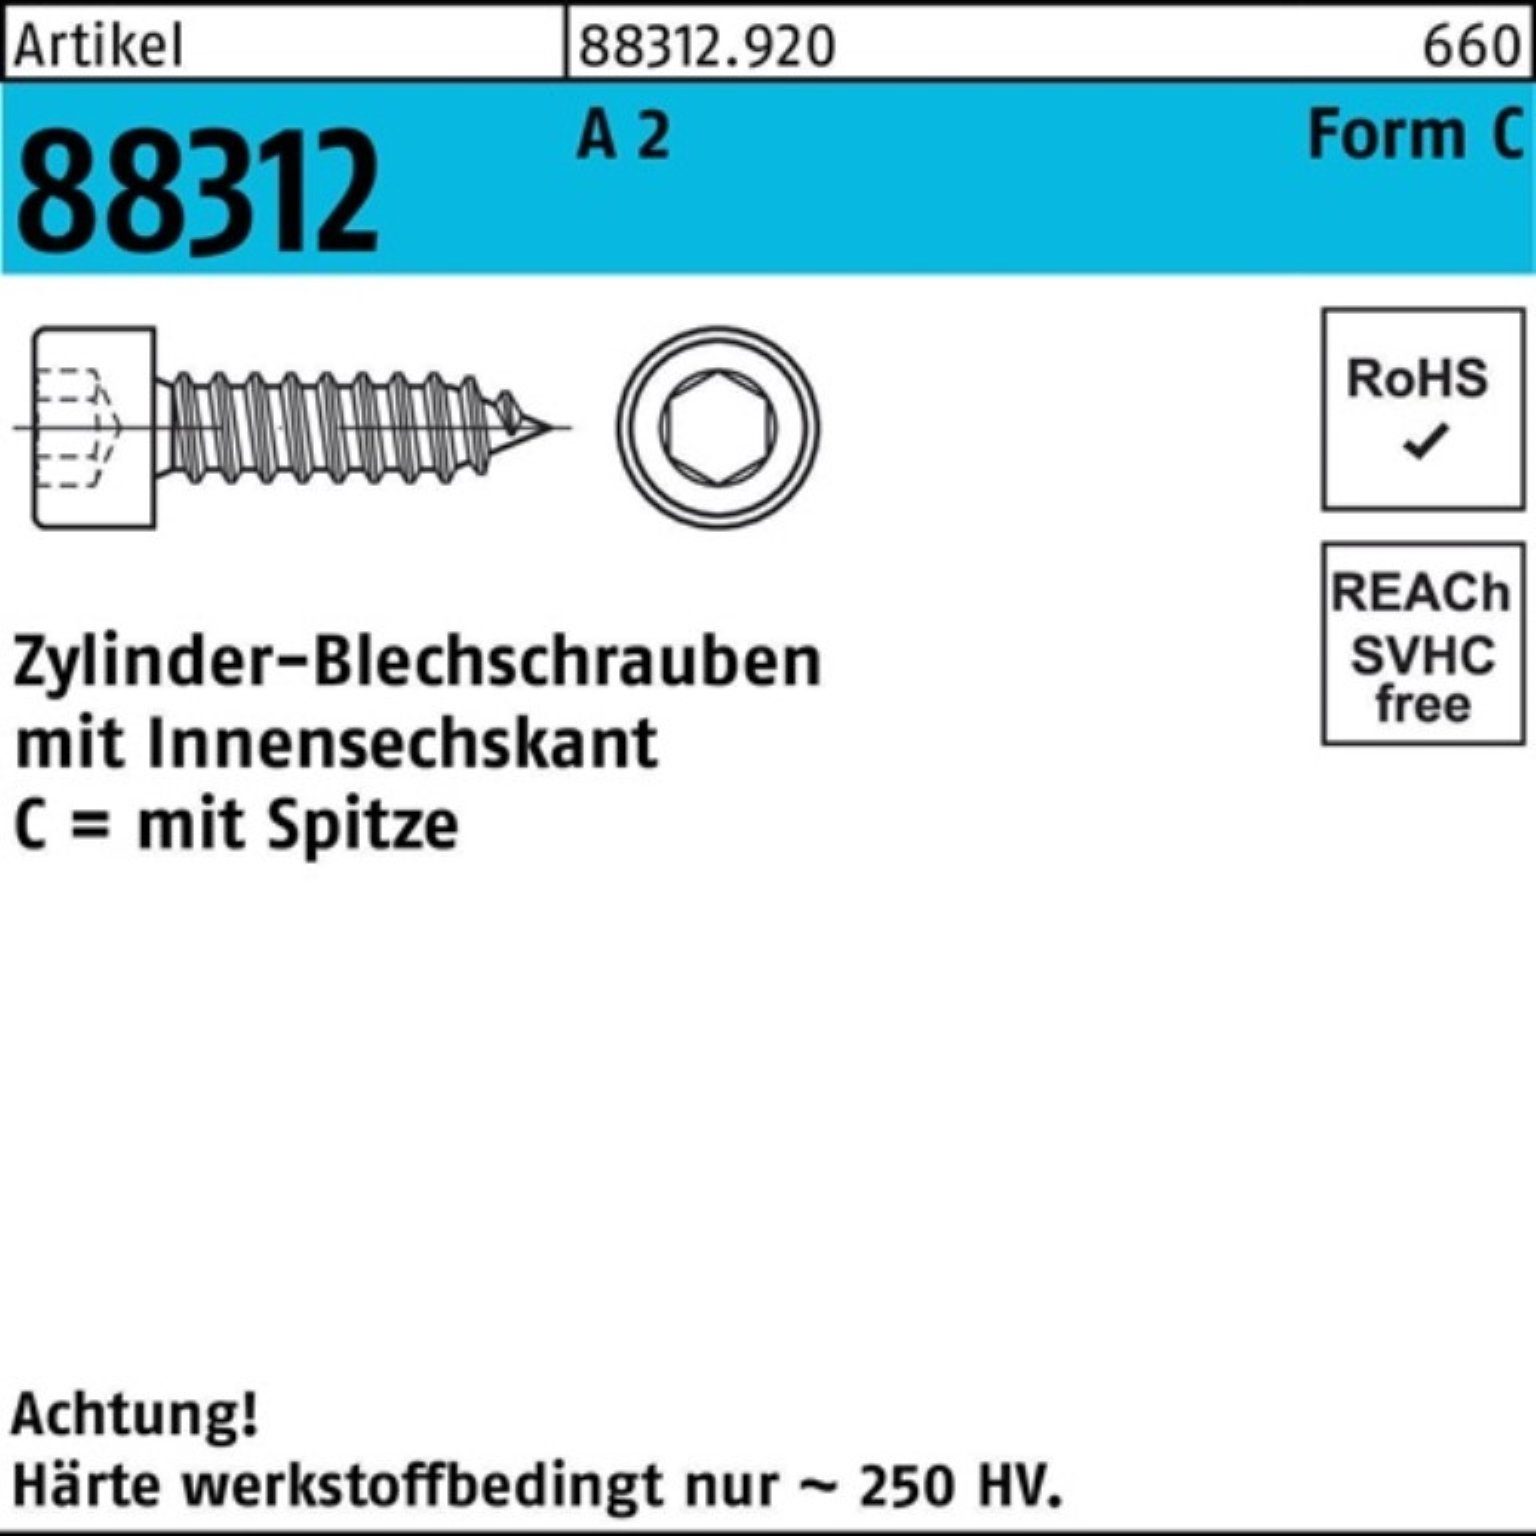 Reyher Blechschraube 200er Pack Zylinderblechschraube R 88312 Spitze/Innen-6kt C 6,3x 16 A